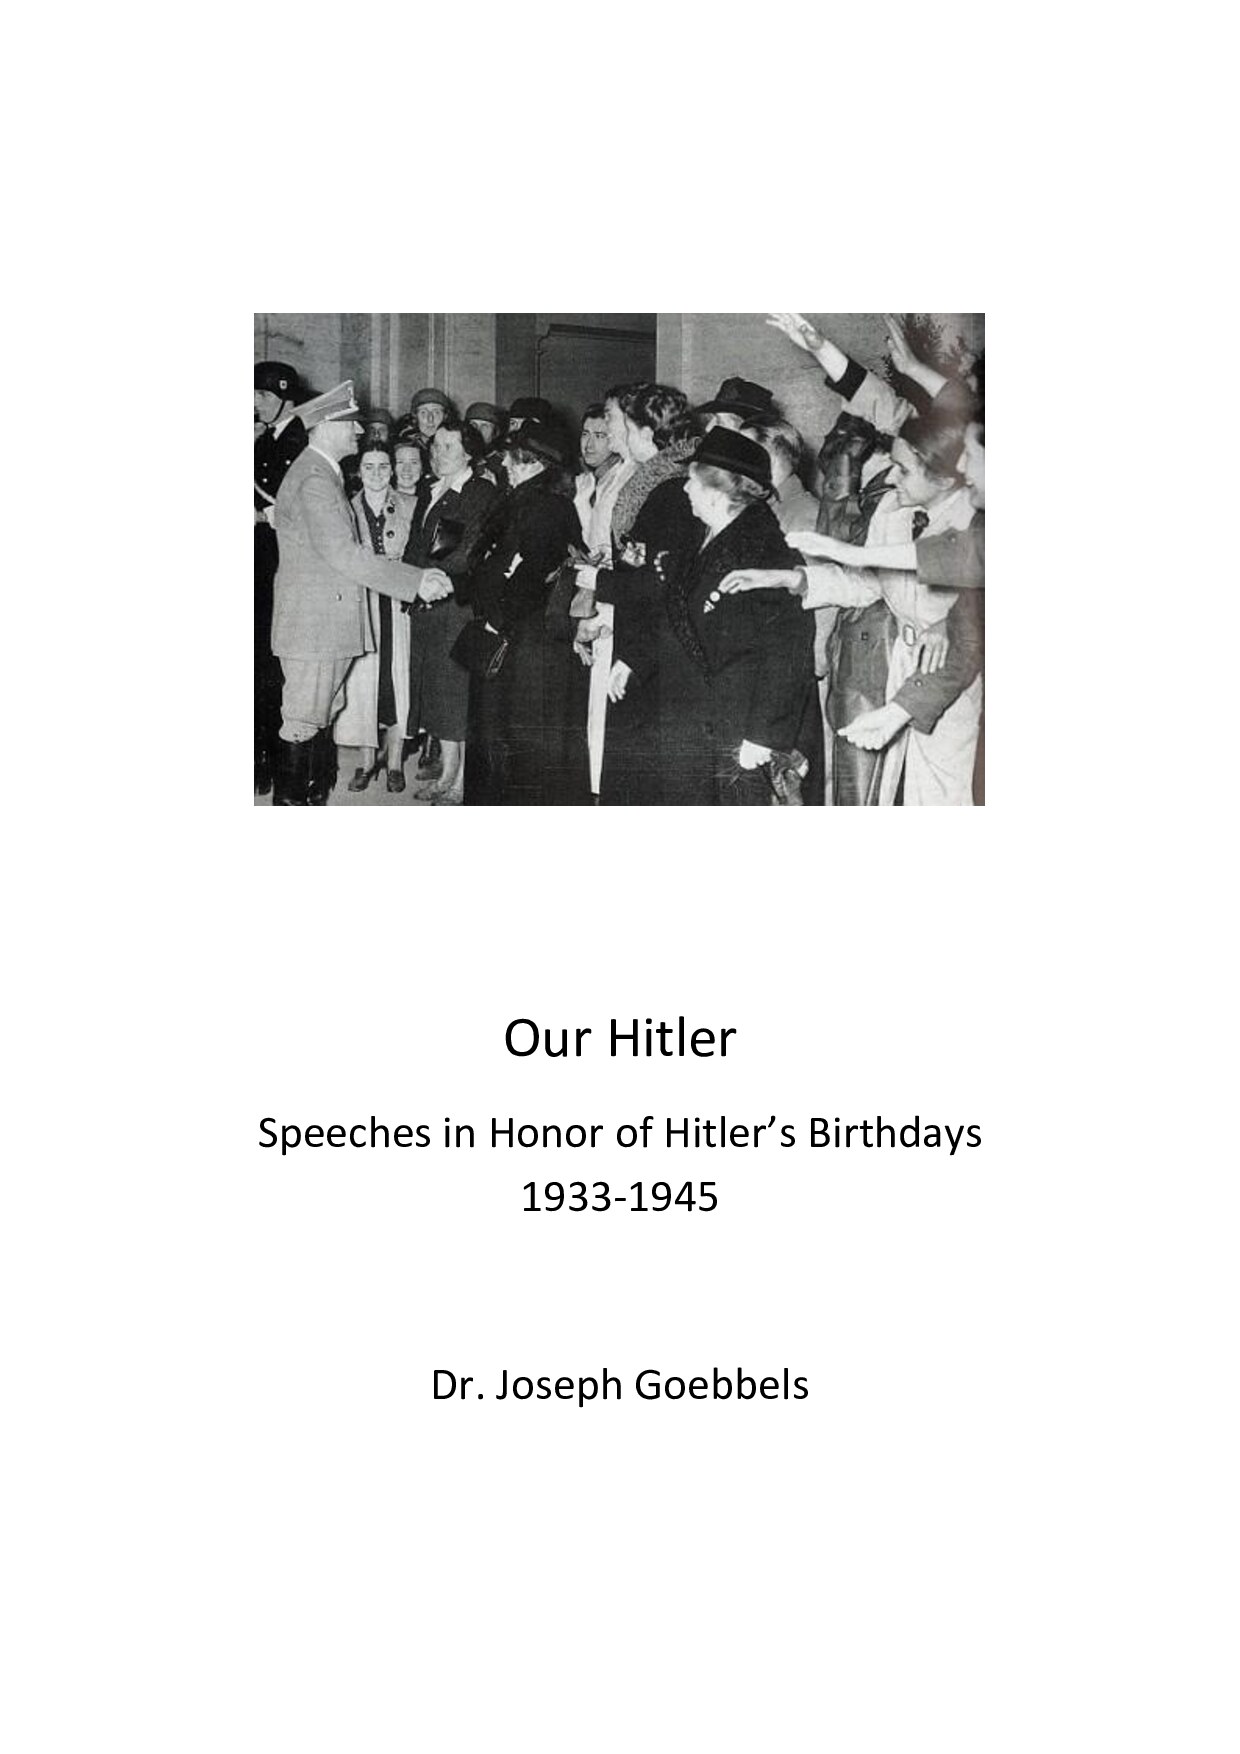 Our Hitler - Speeches on Hitlers Birthdays